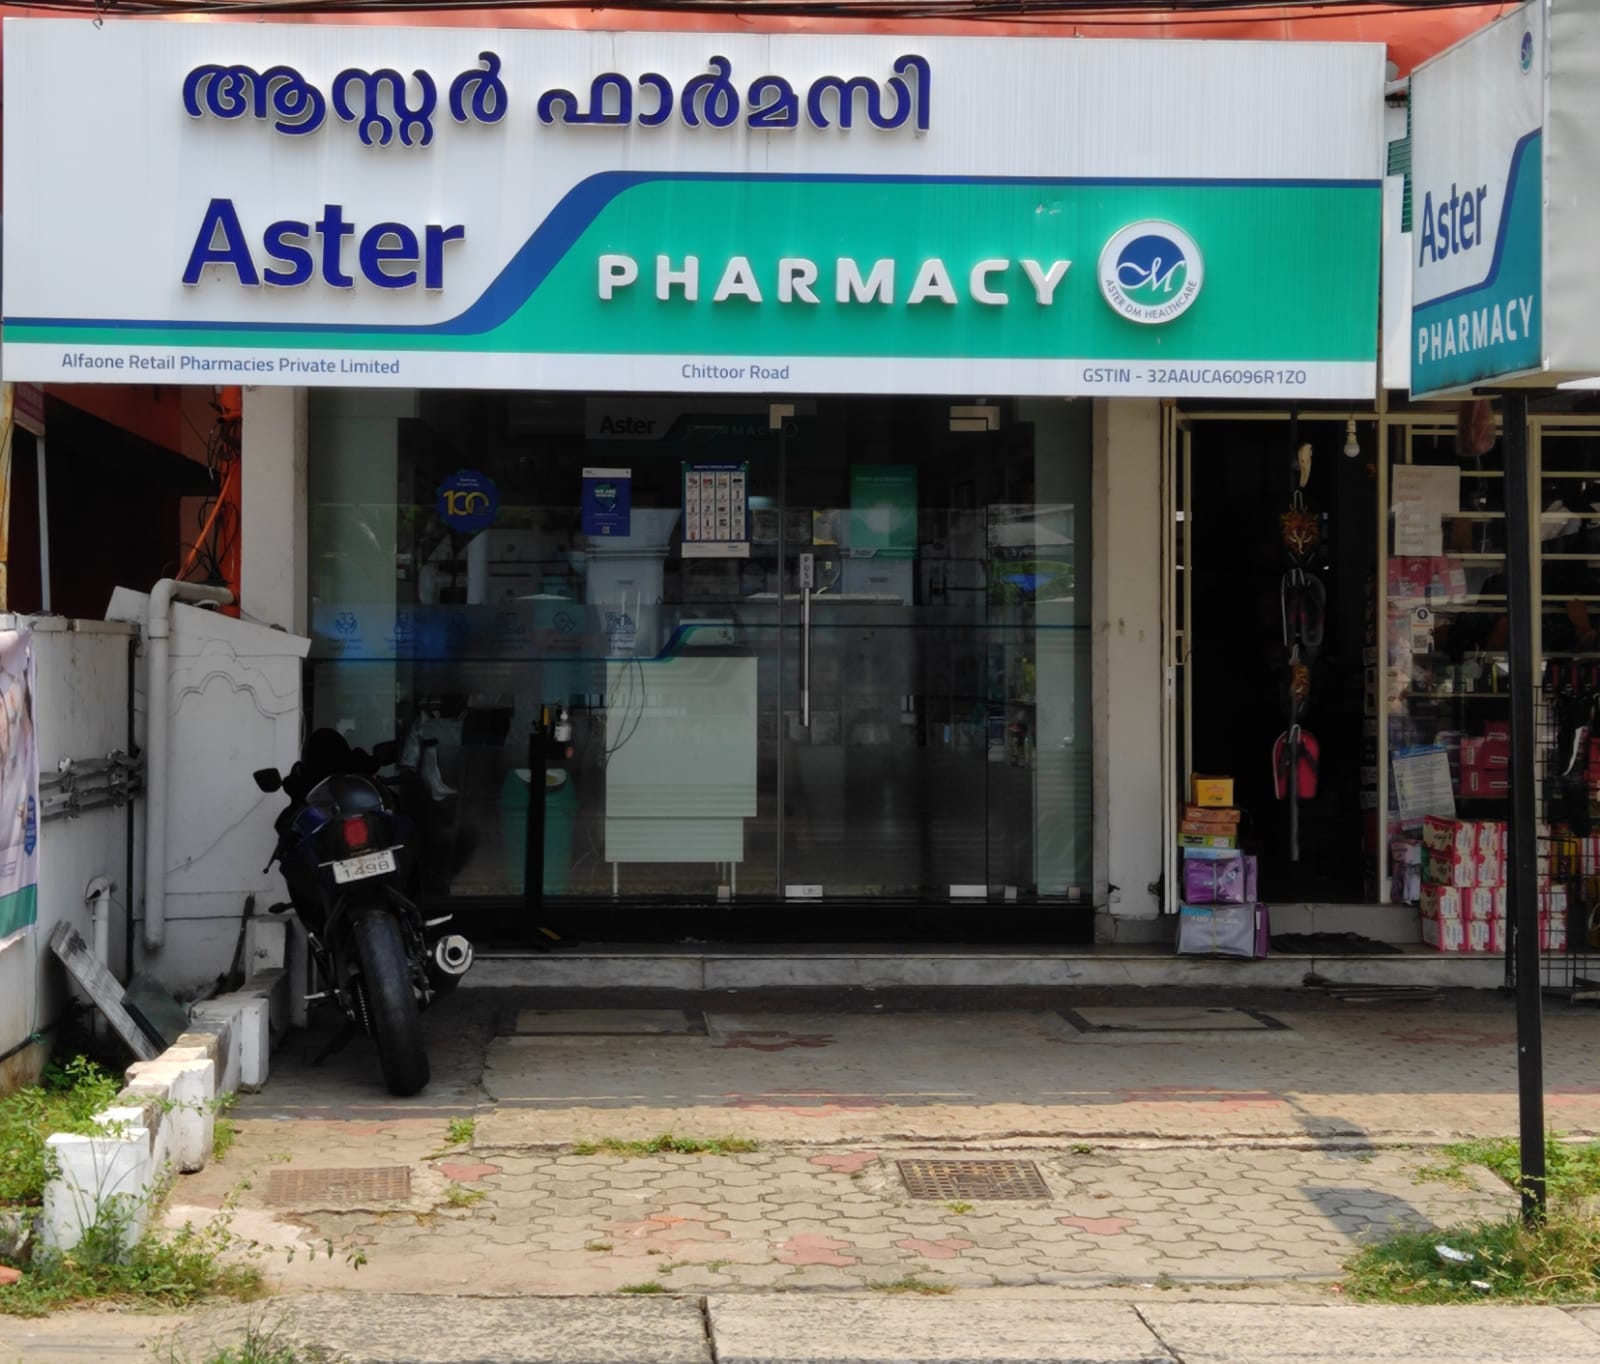 Aster Pharmacy in Cemetery Junction, Ernakulam